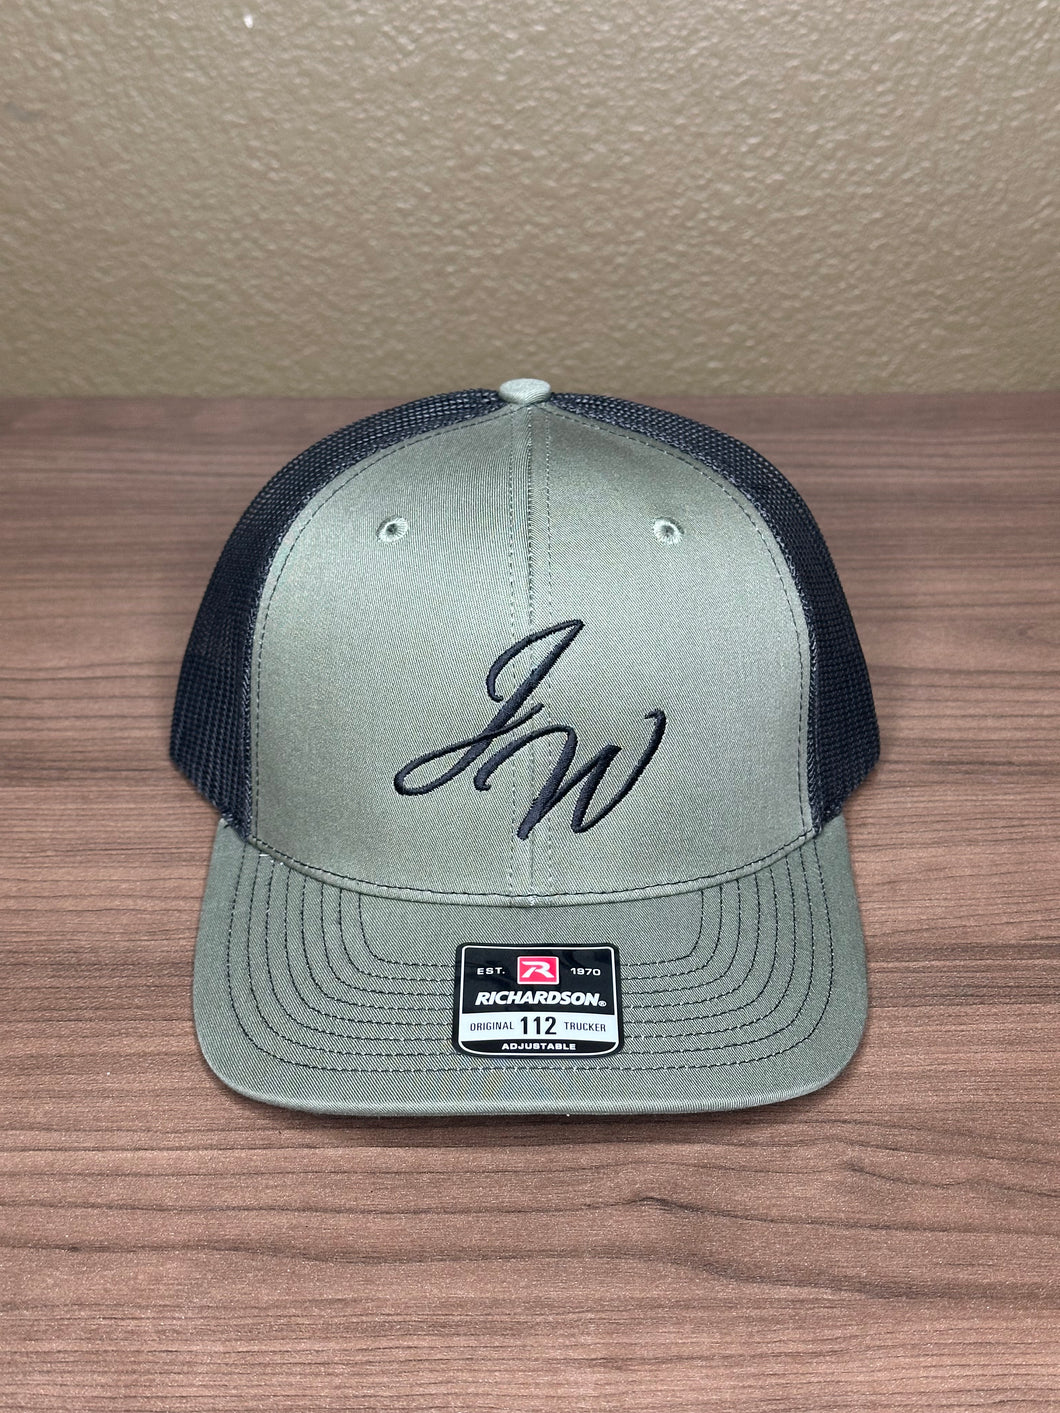 J-Walkers Adjustable SnapBack Hat